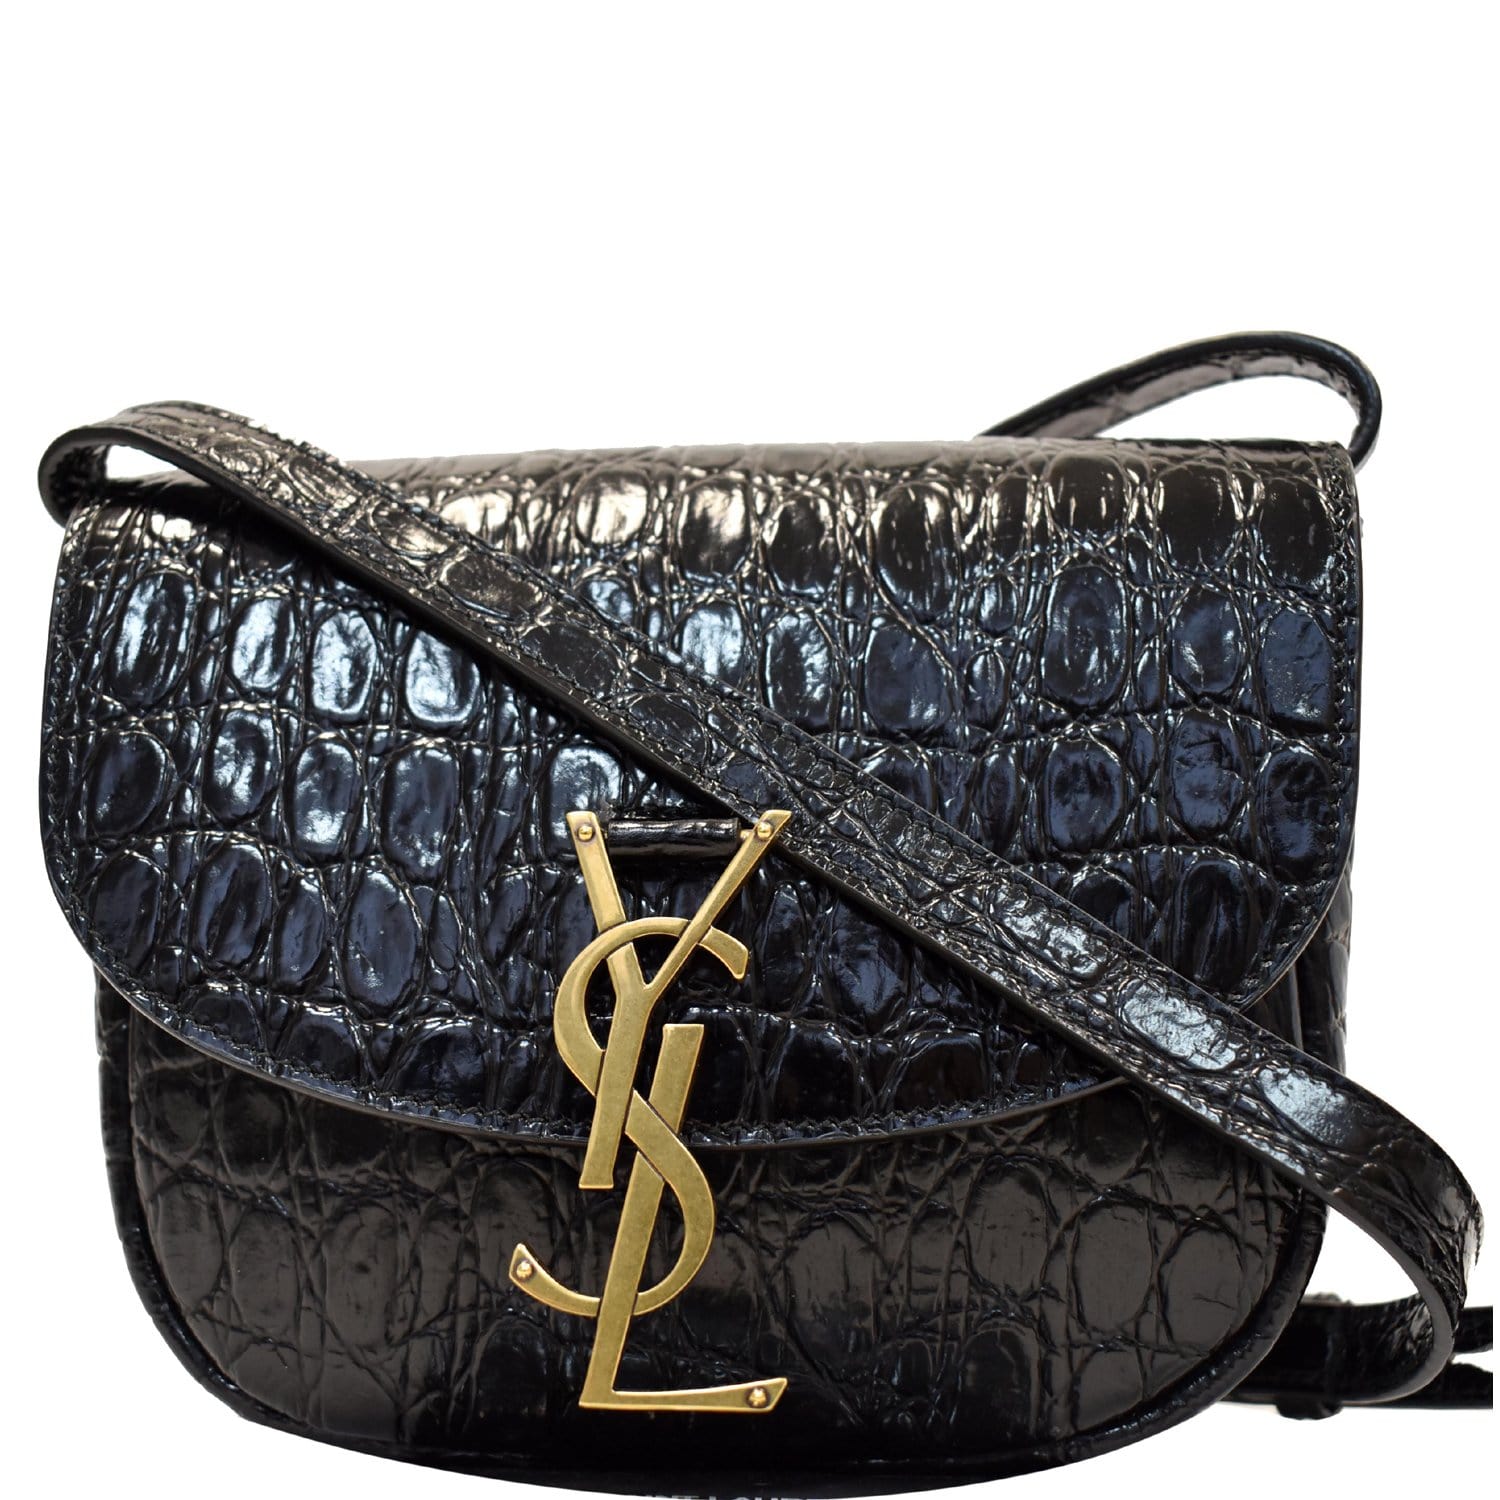 Yves Saint Laurent Handbags for sale in Corona del Mar